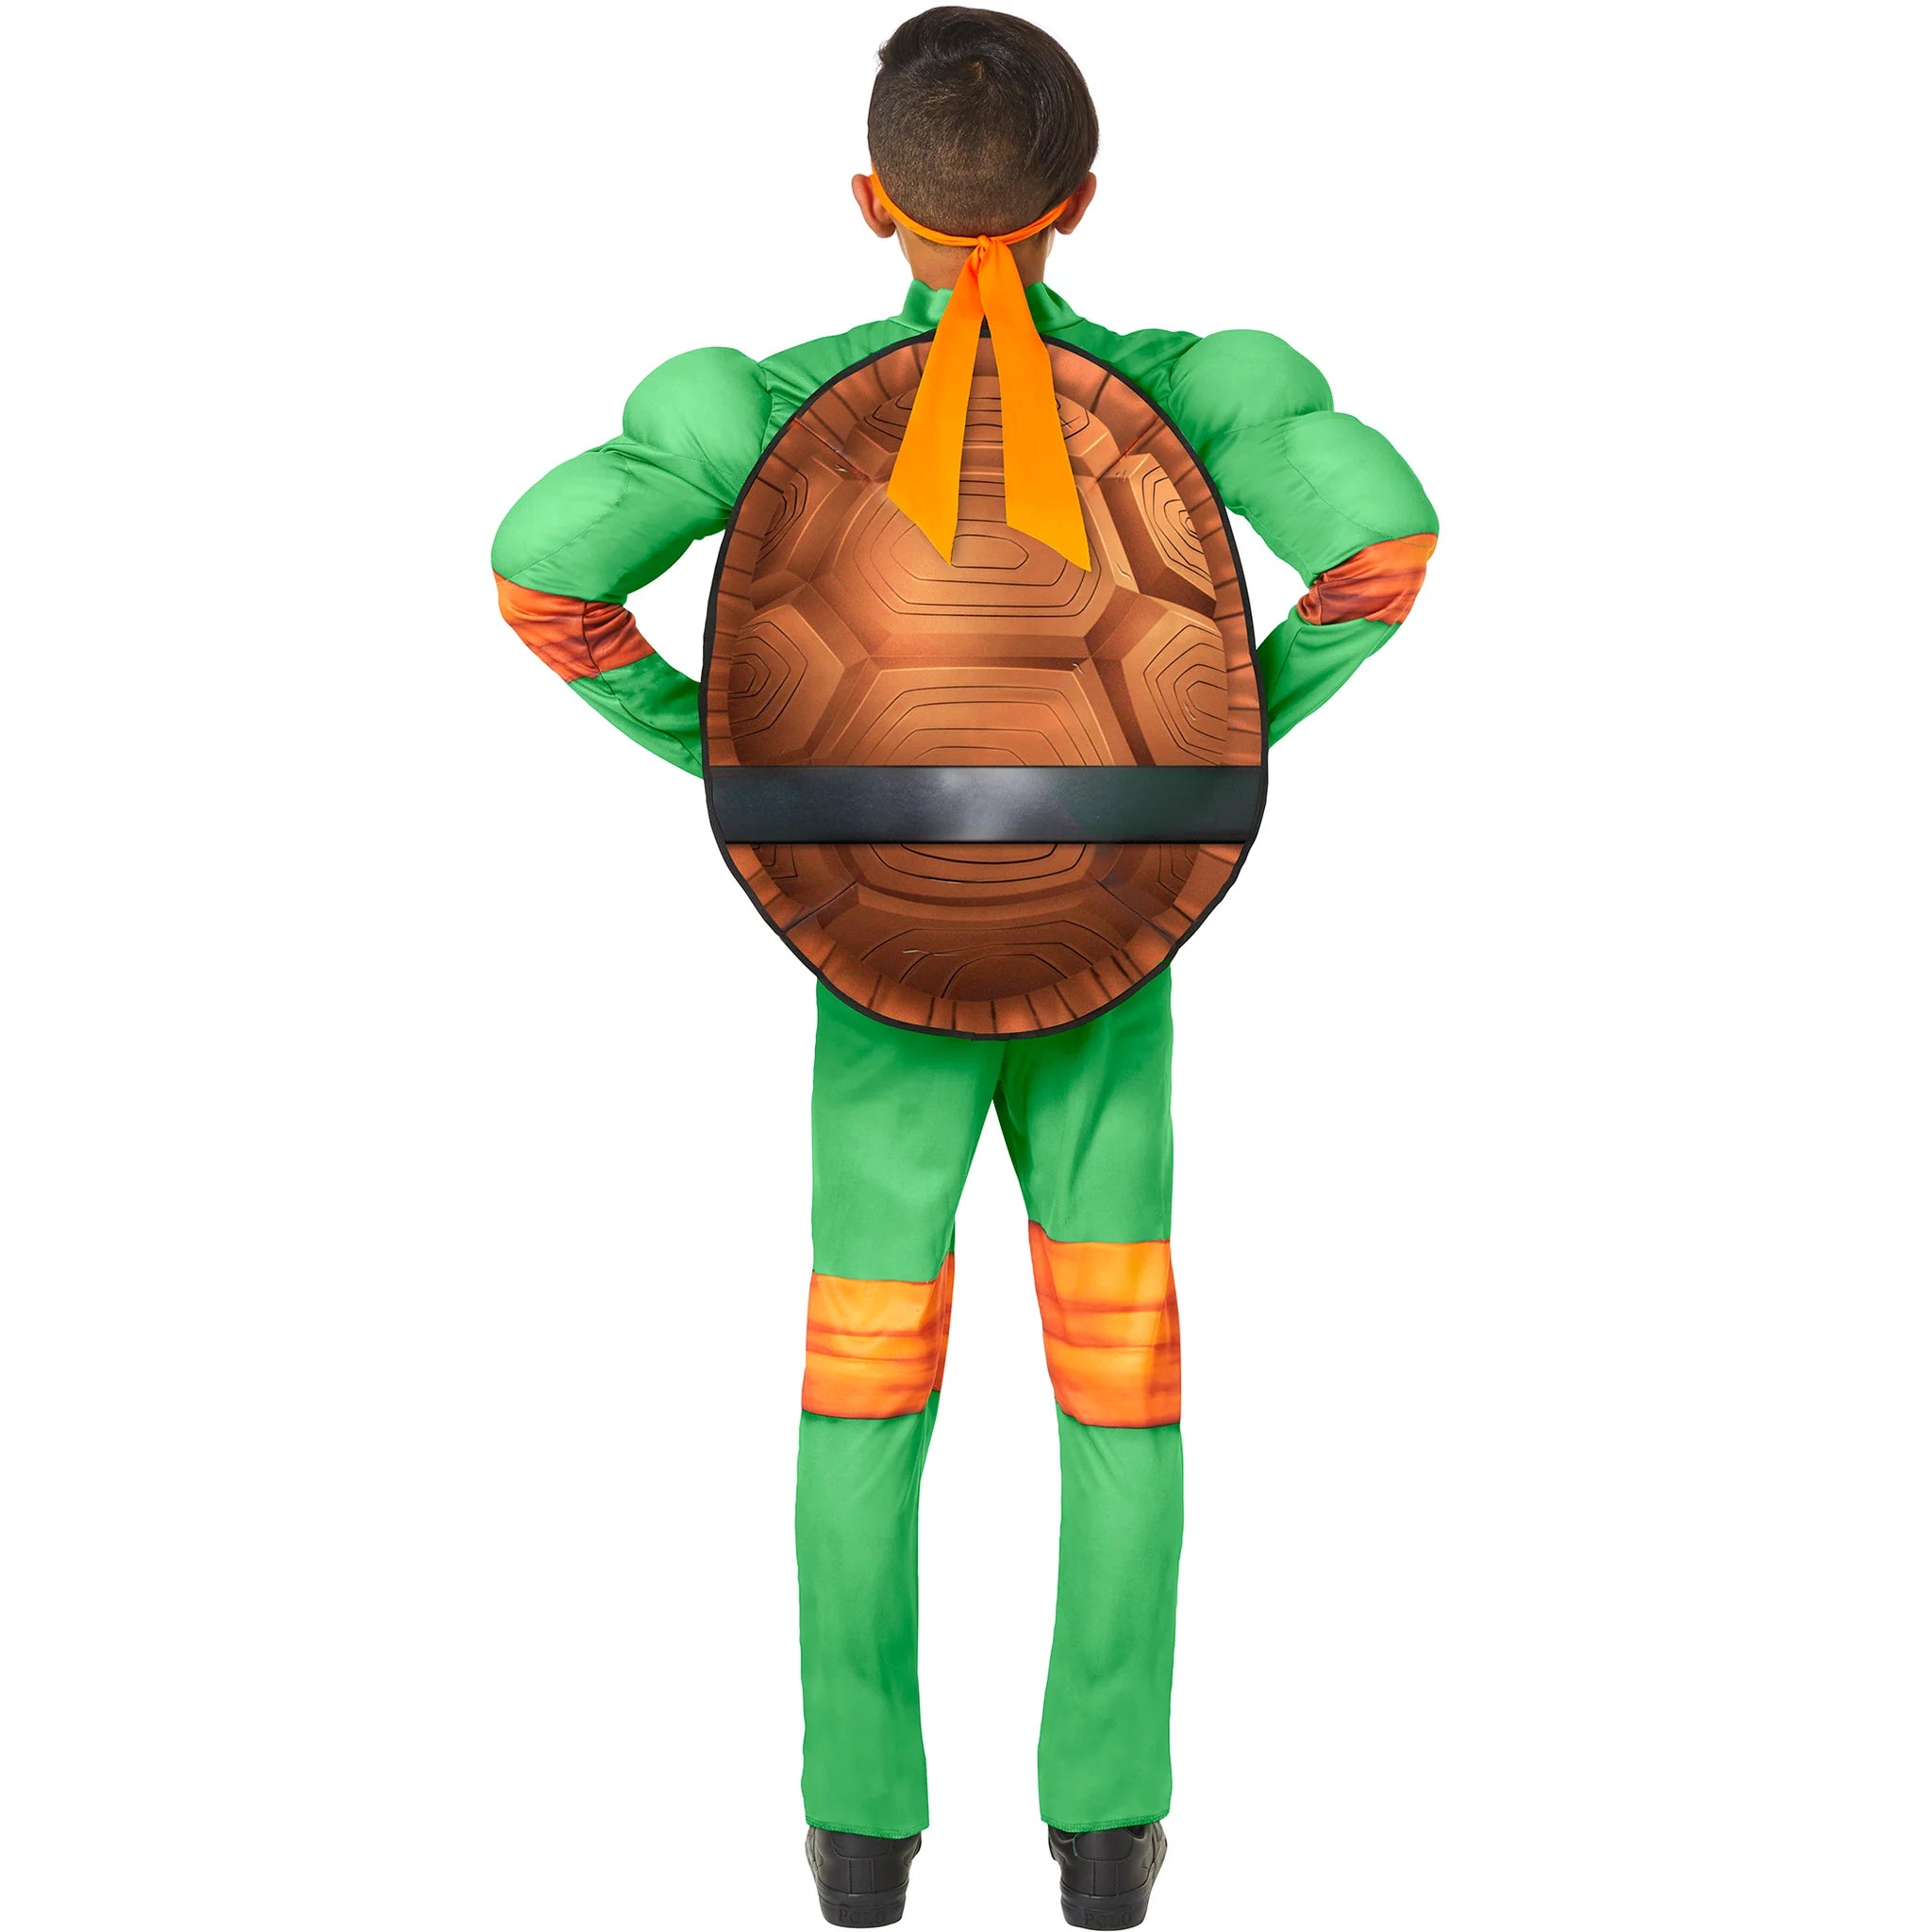 TMNT Mutant Michelangelo Child's Costume